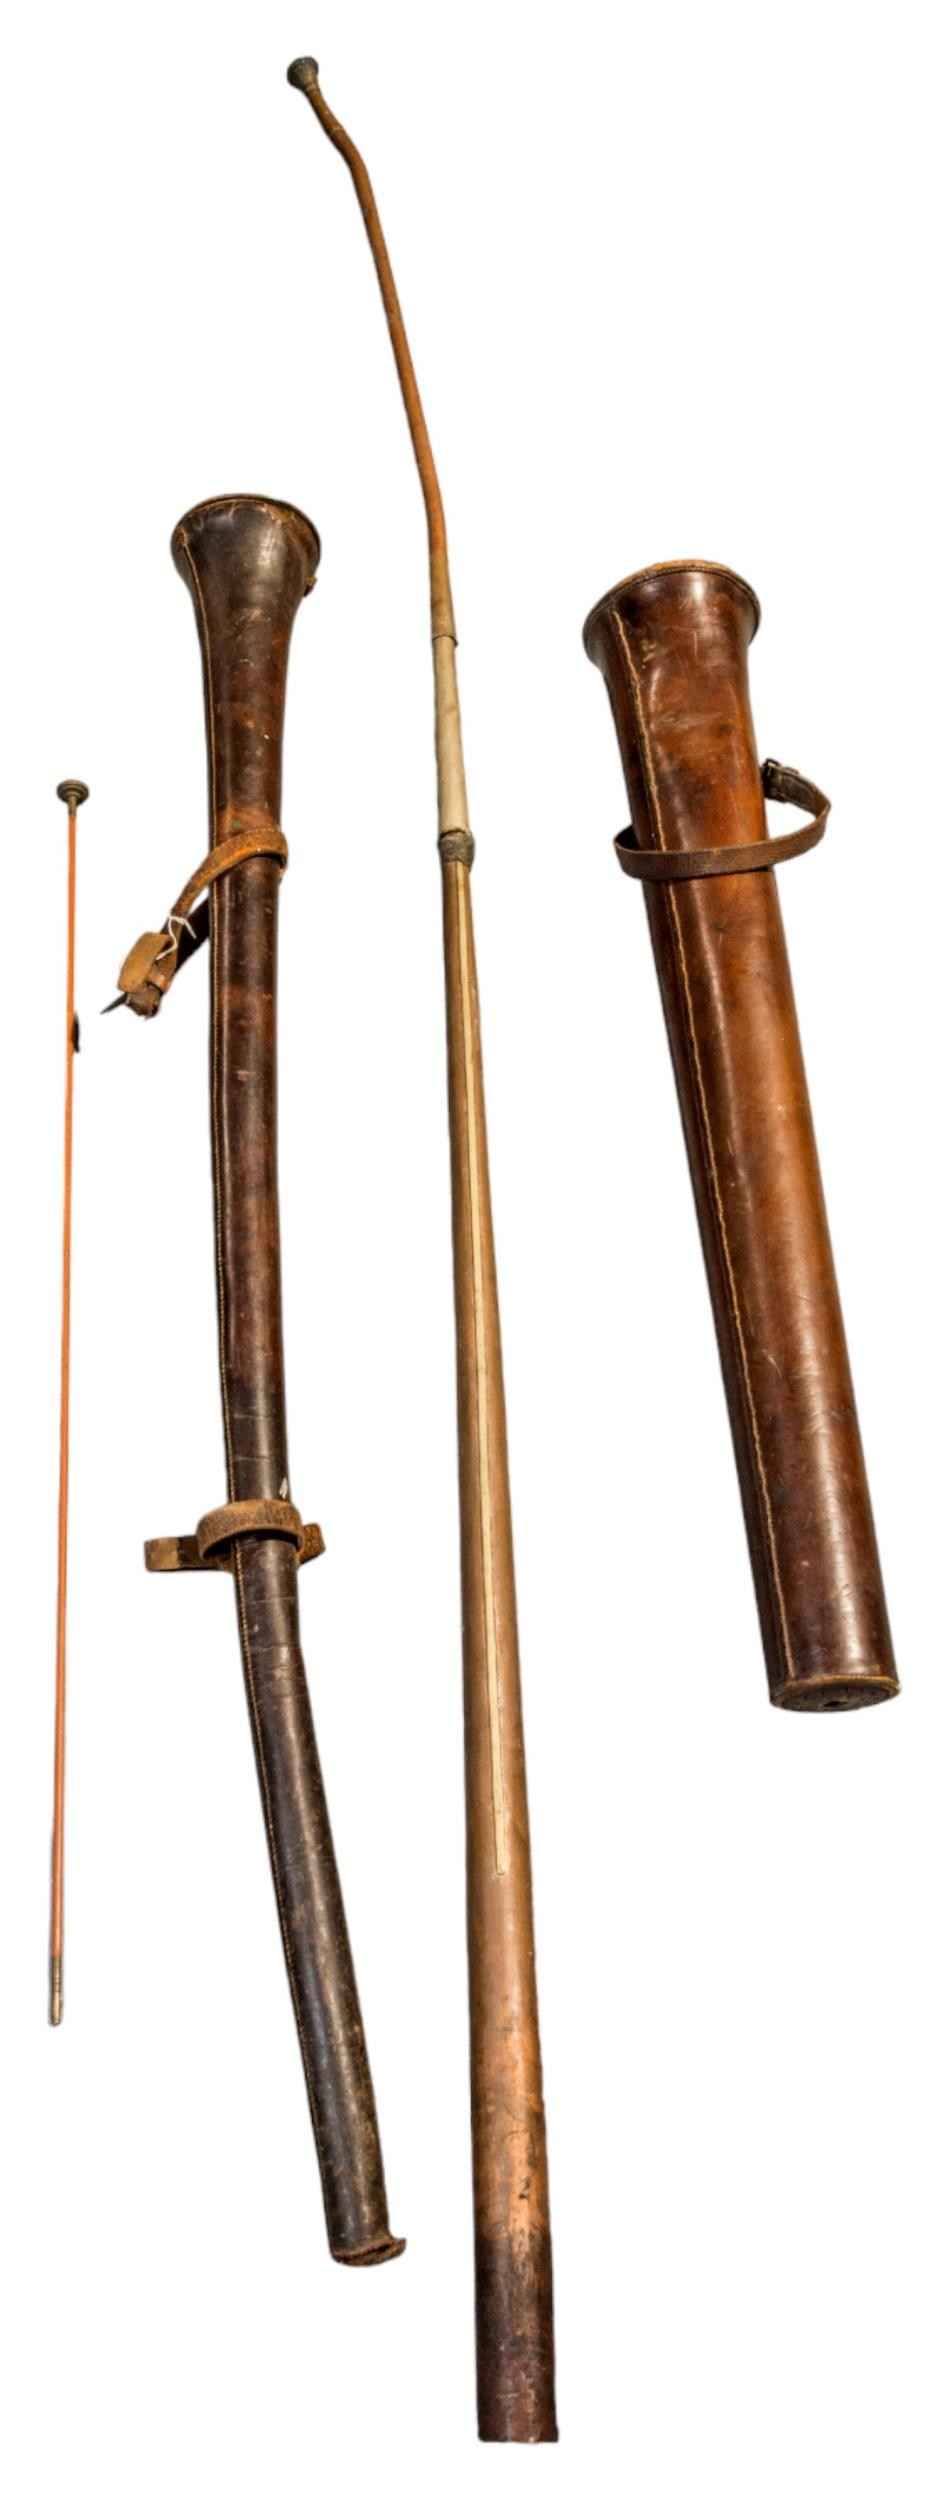 A COPPER COACHING HORN IN A LEATHER CASE, a leather coaching horn case and a ‘made-up’ long copper